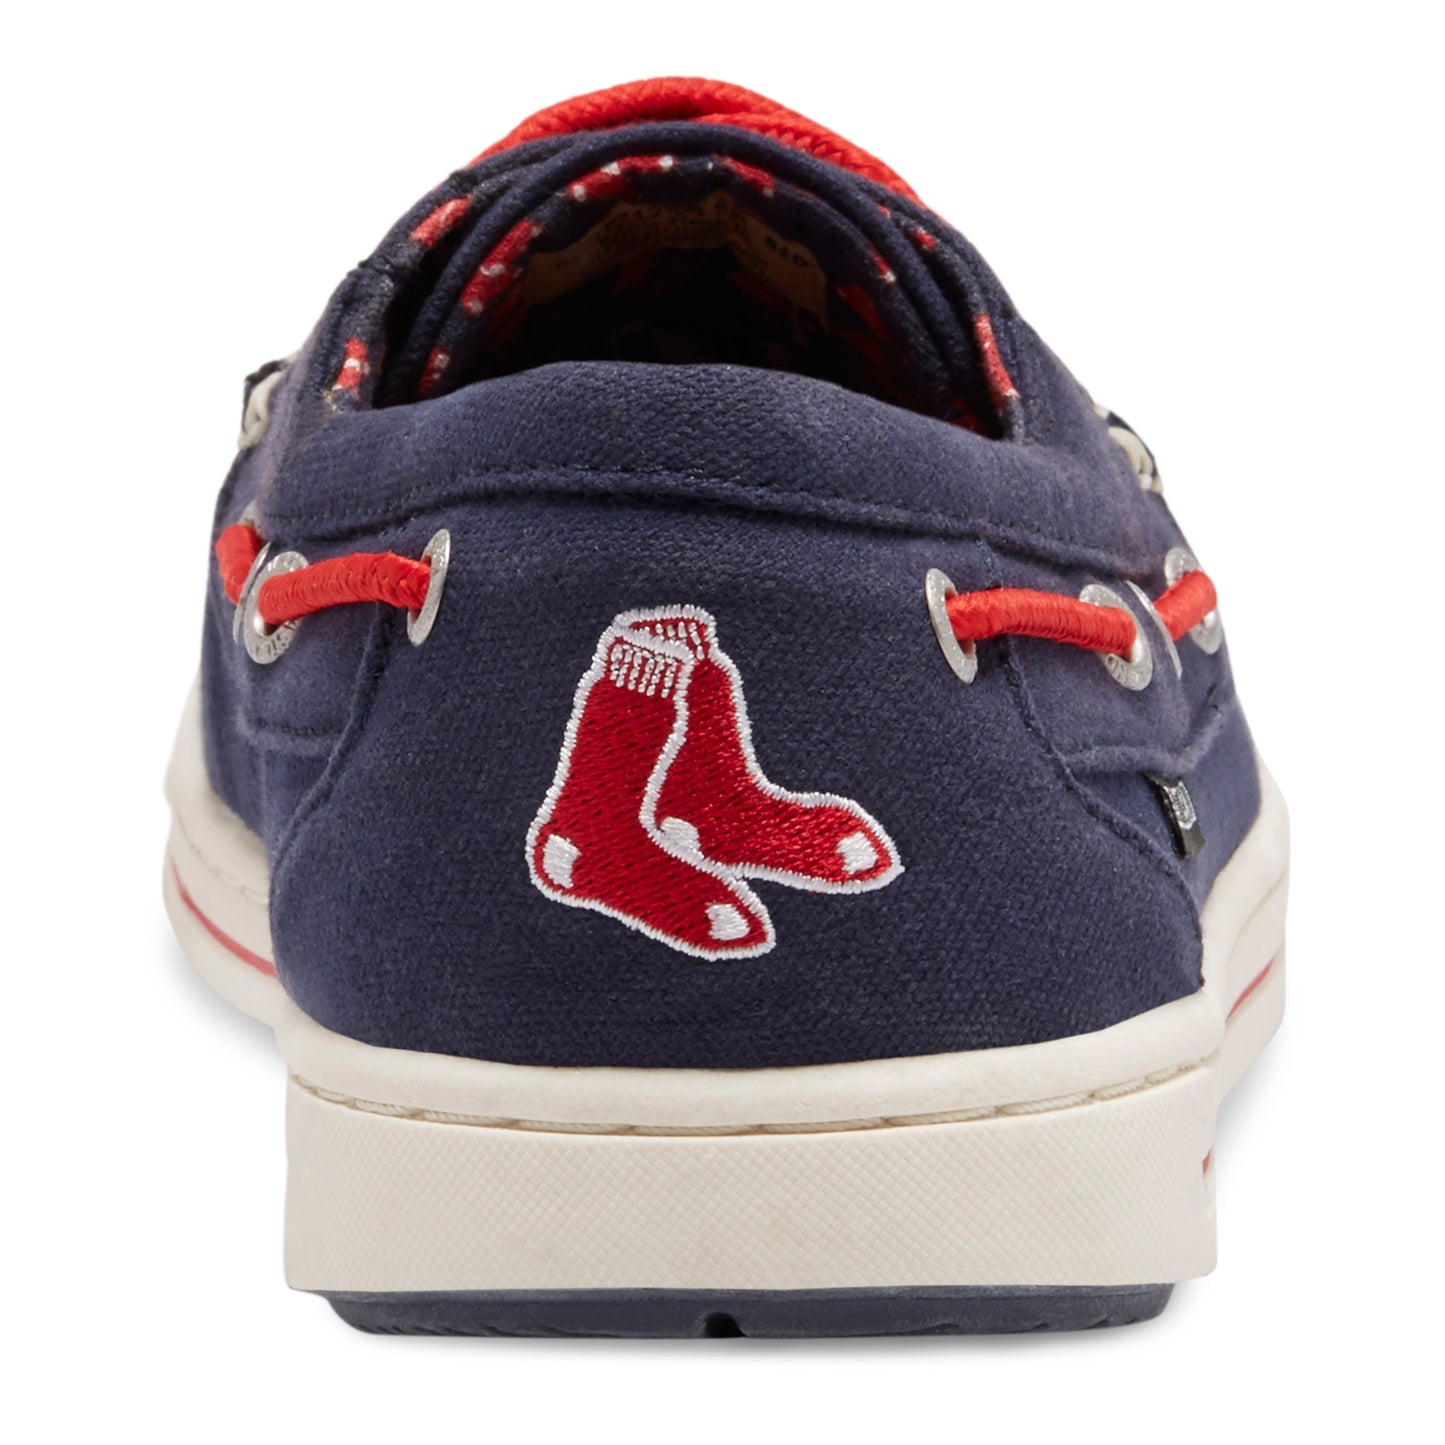 Men's Adventure MLB Boston Red Sox Canvas Boat Shoe